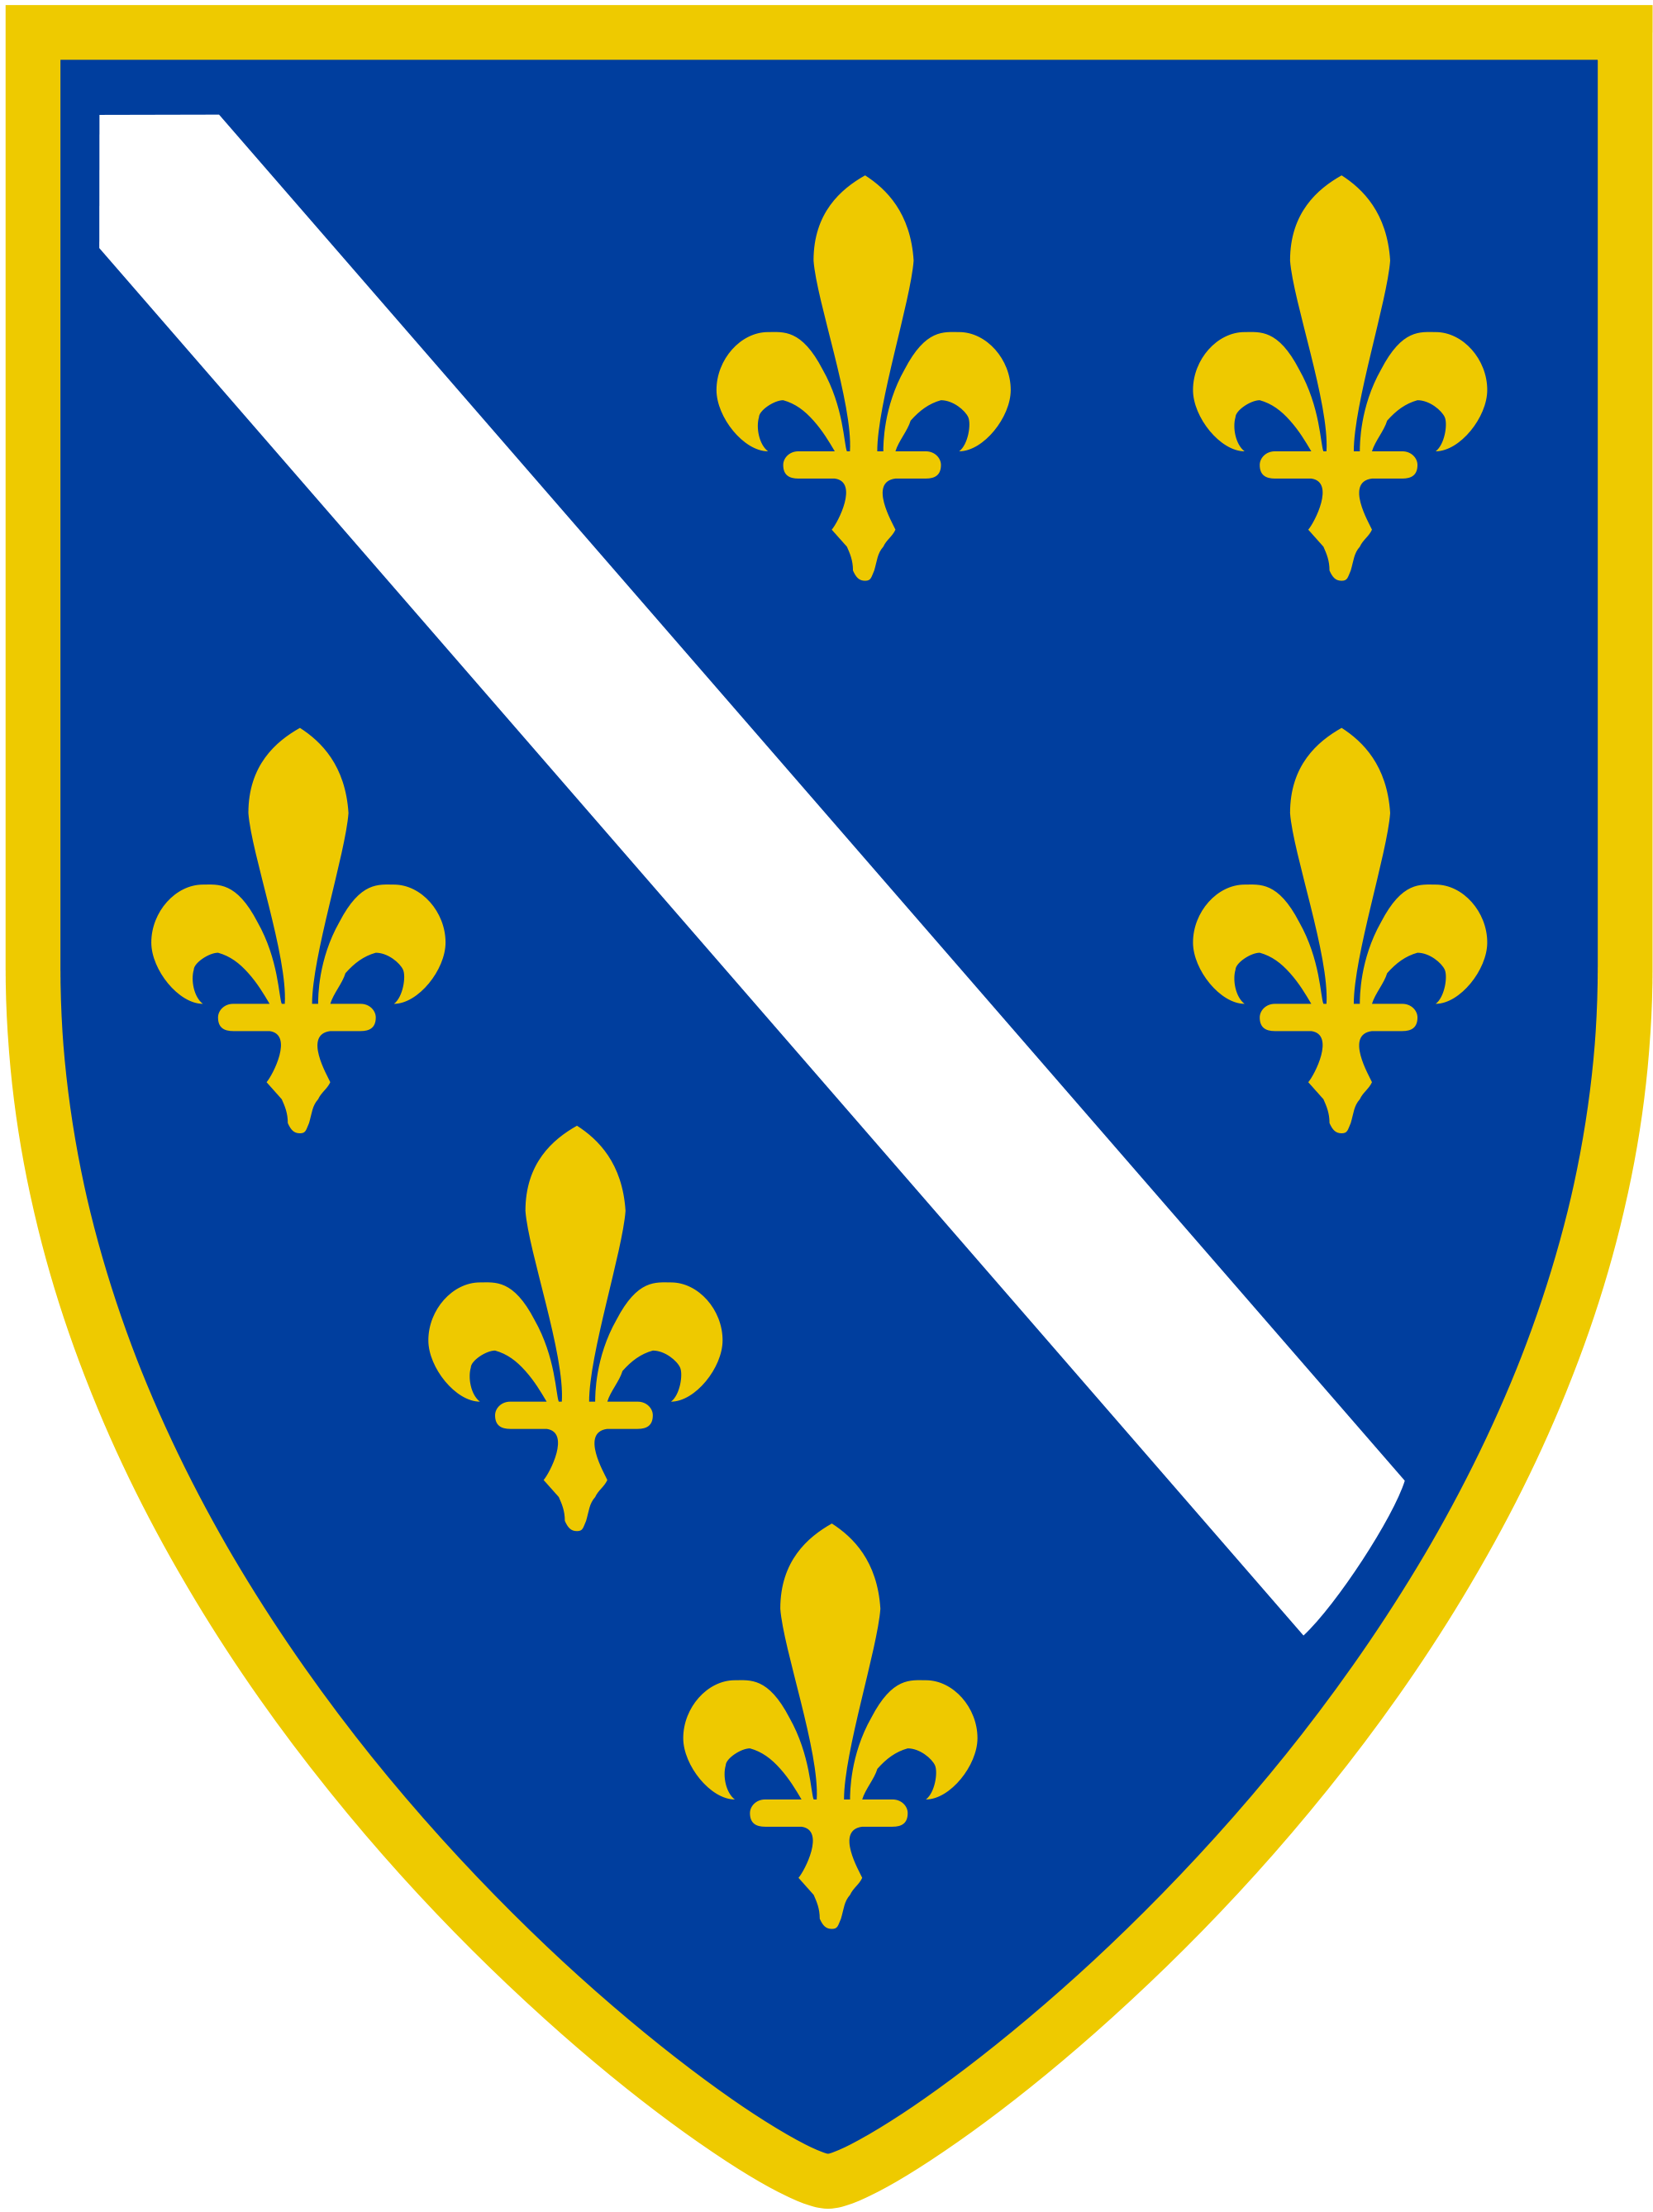 Kingdom of Bosnia